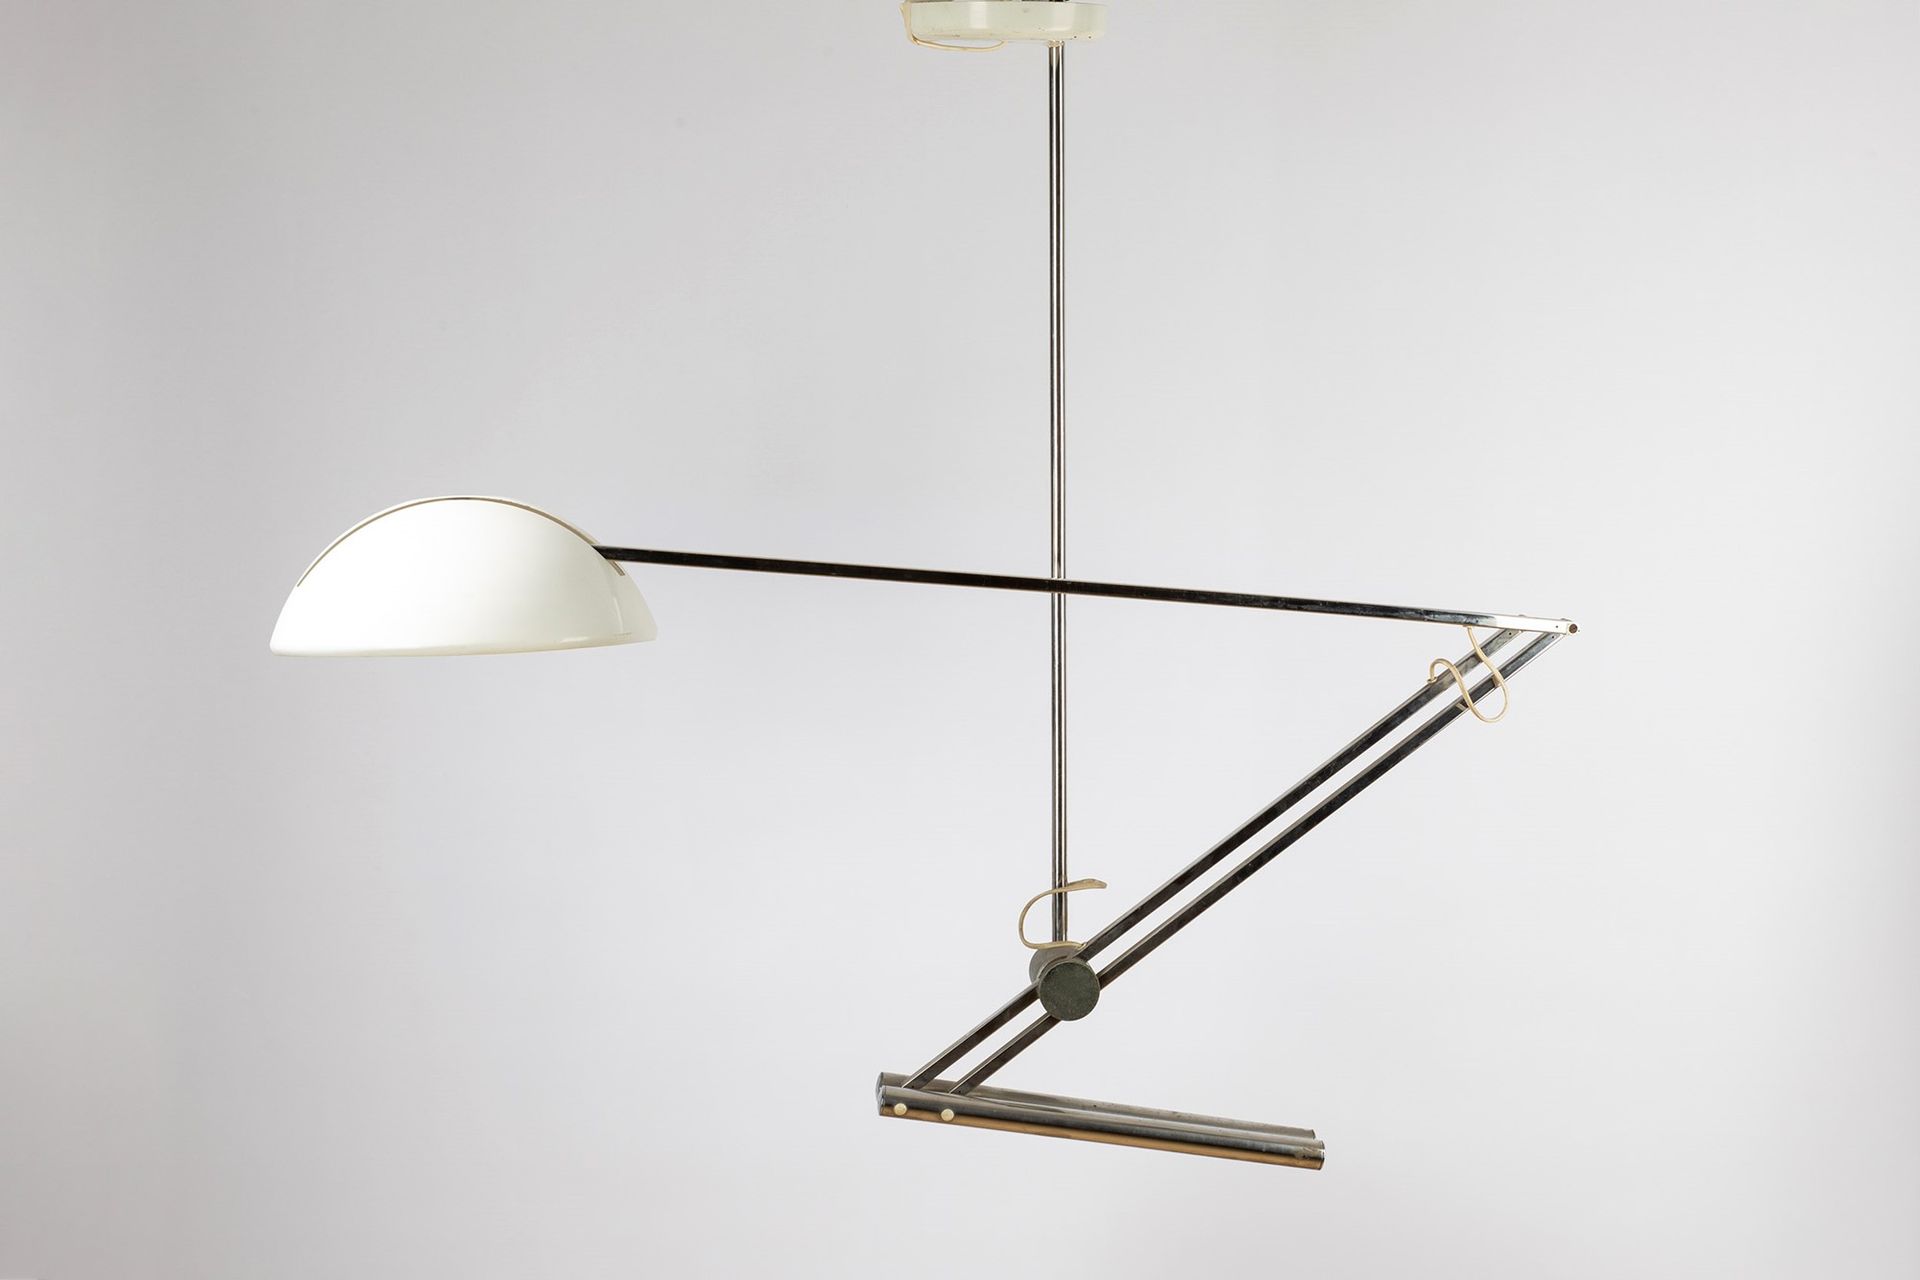 ITALIAN MANUFACTURE Pendant lamp, 60's period

h cm 116 x 122 x 34
with adjustab&hellip;